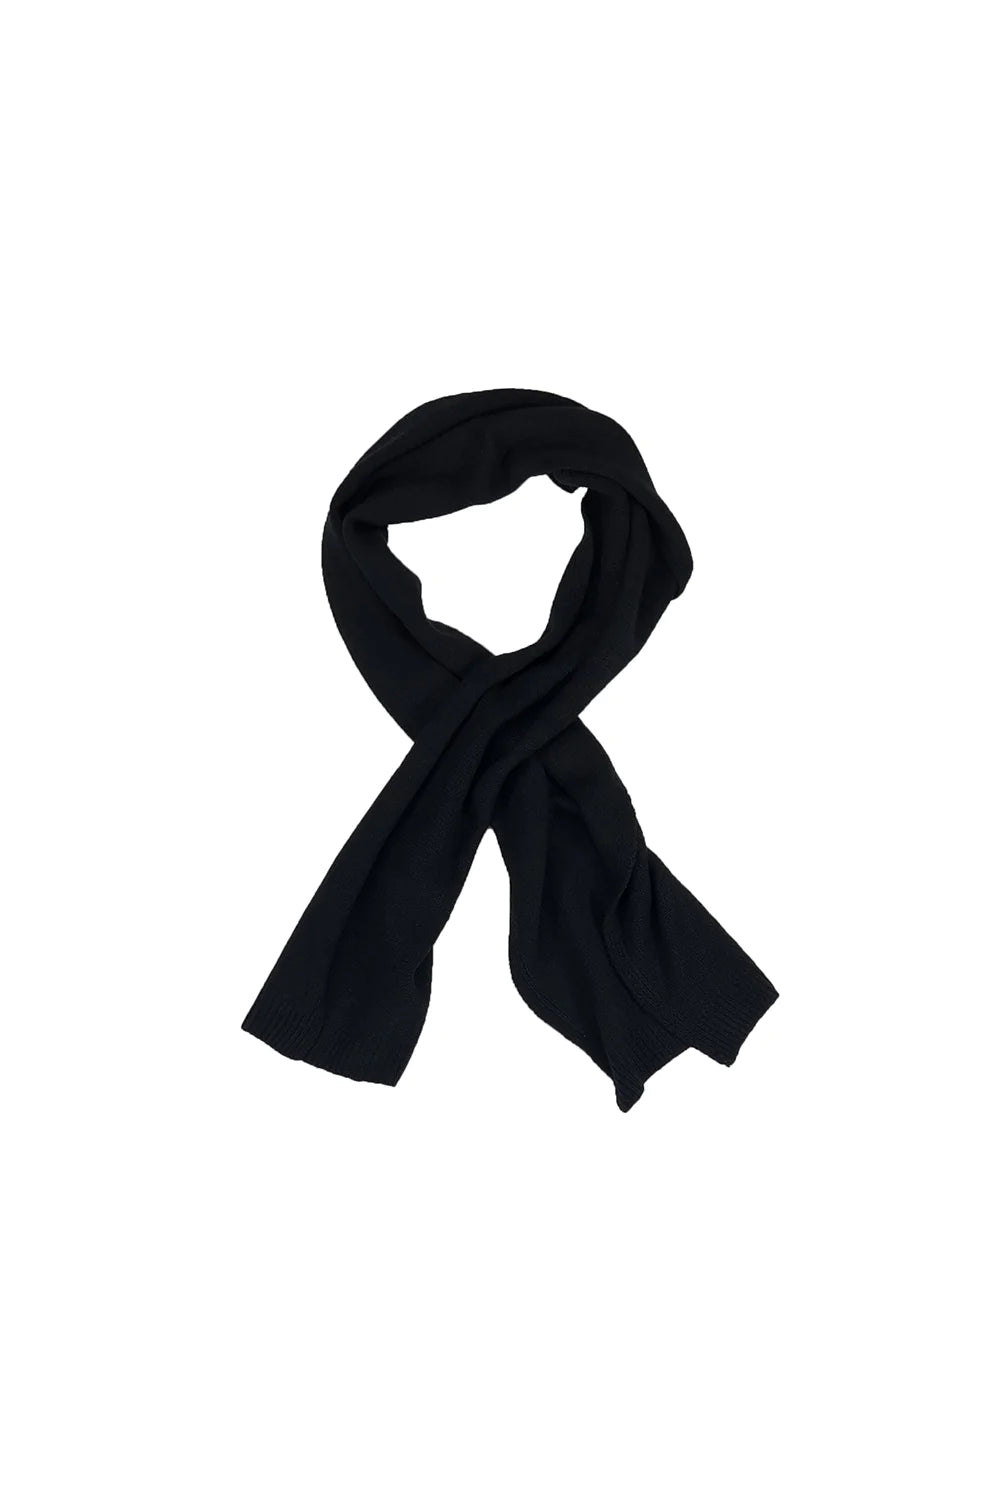 JUNGMAVEN Sustainable Hemp Accessories - Classic Knit Unisex Scarf - Hemp Merino Wool Eco-Blend - Black